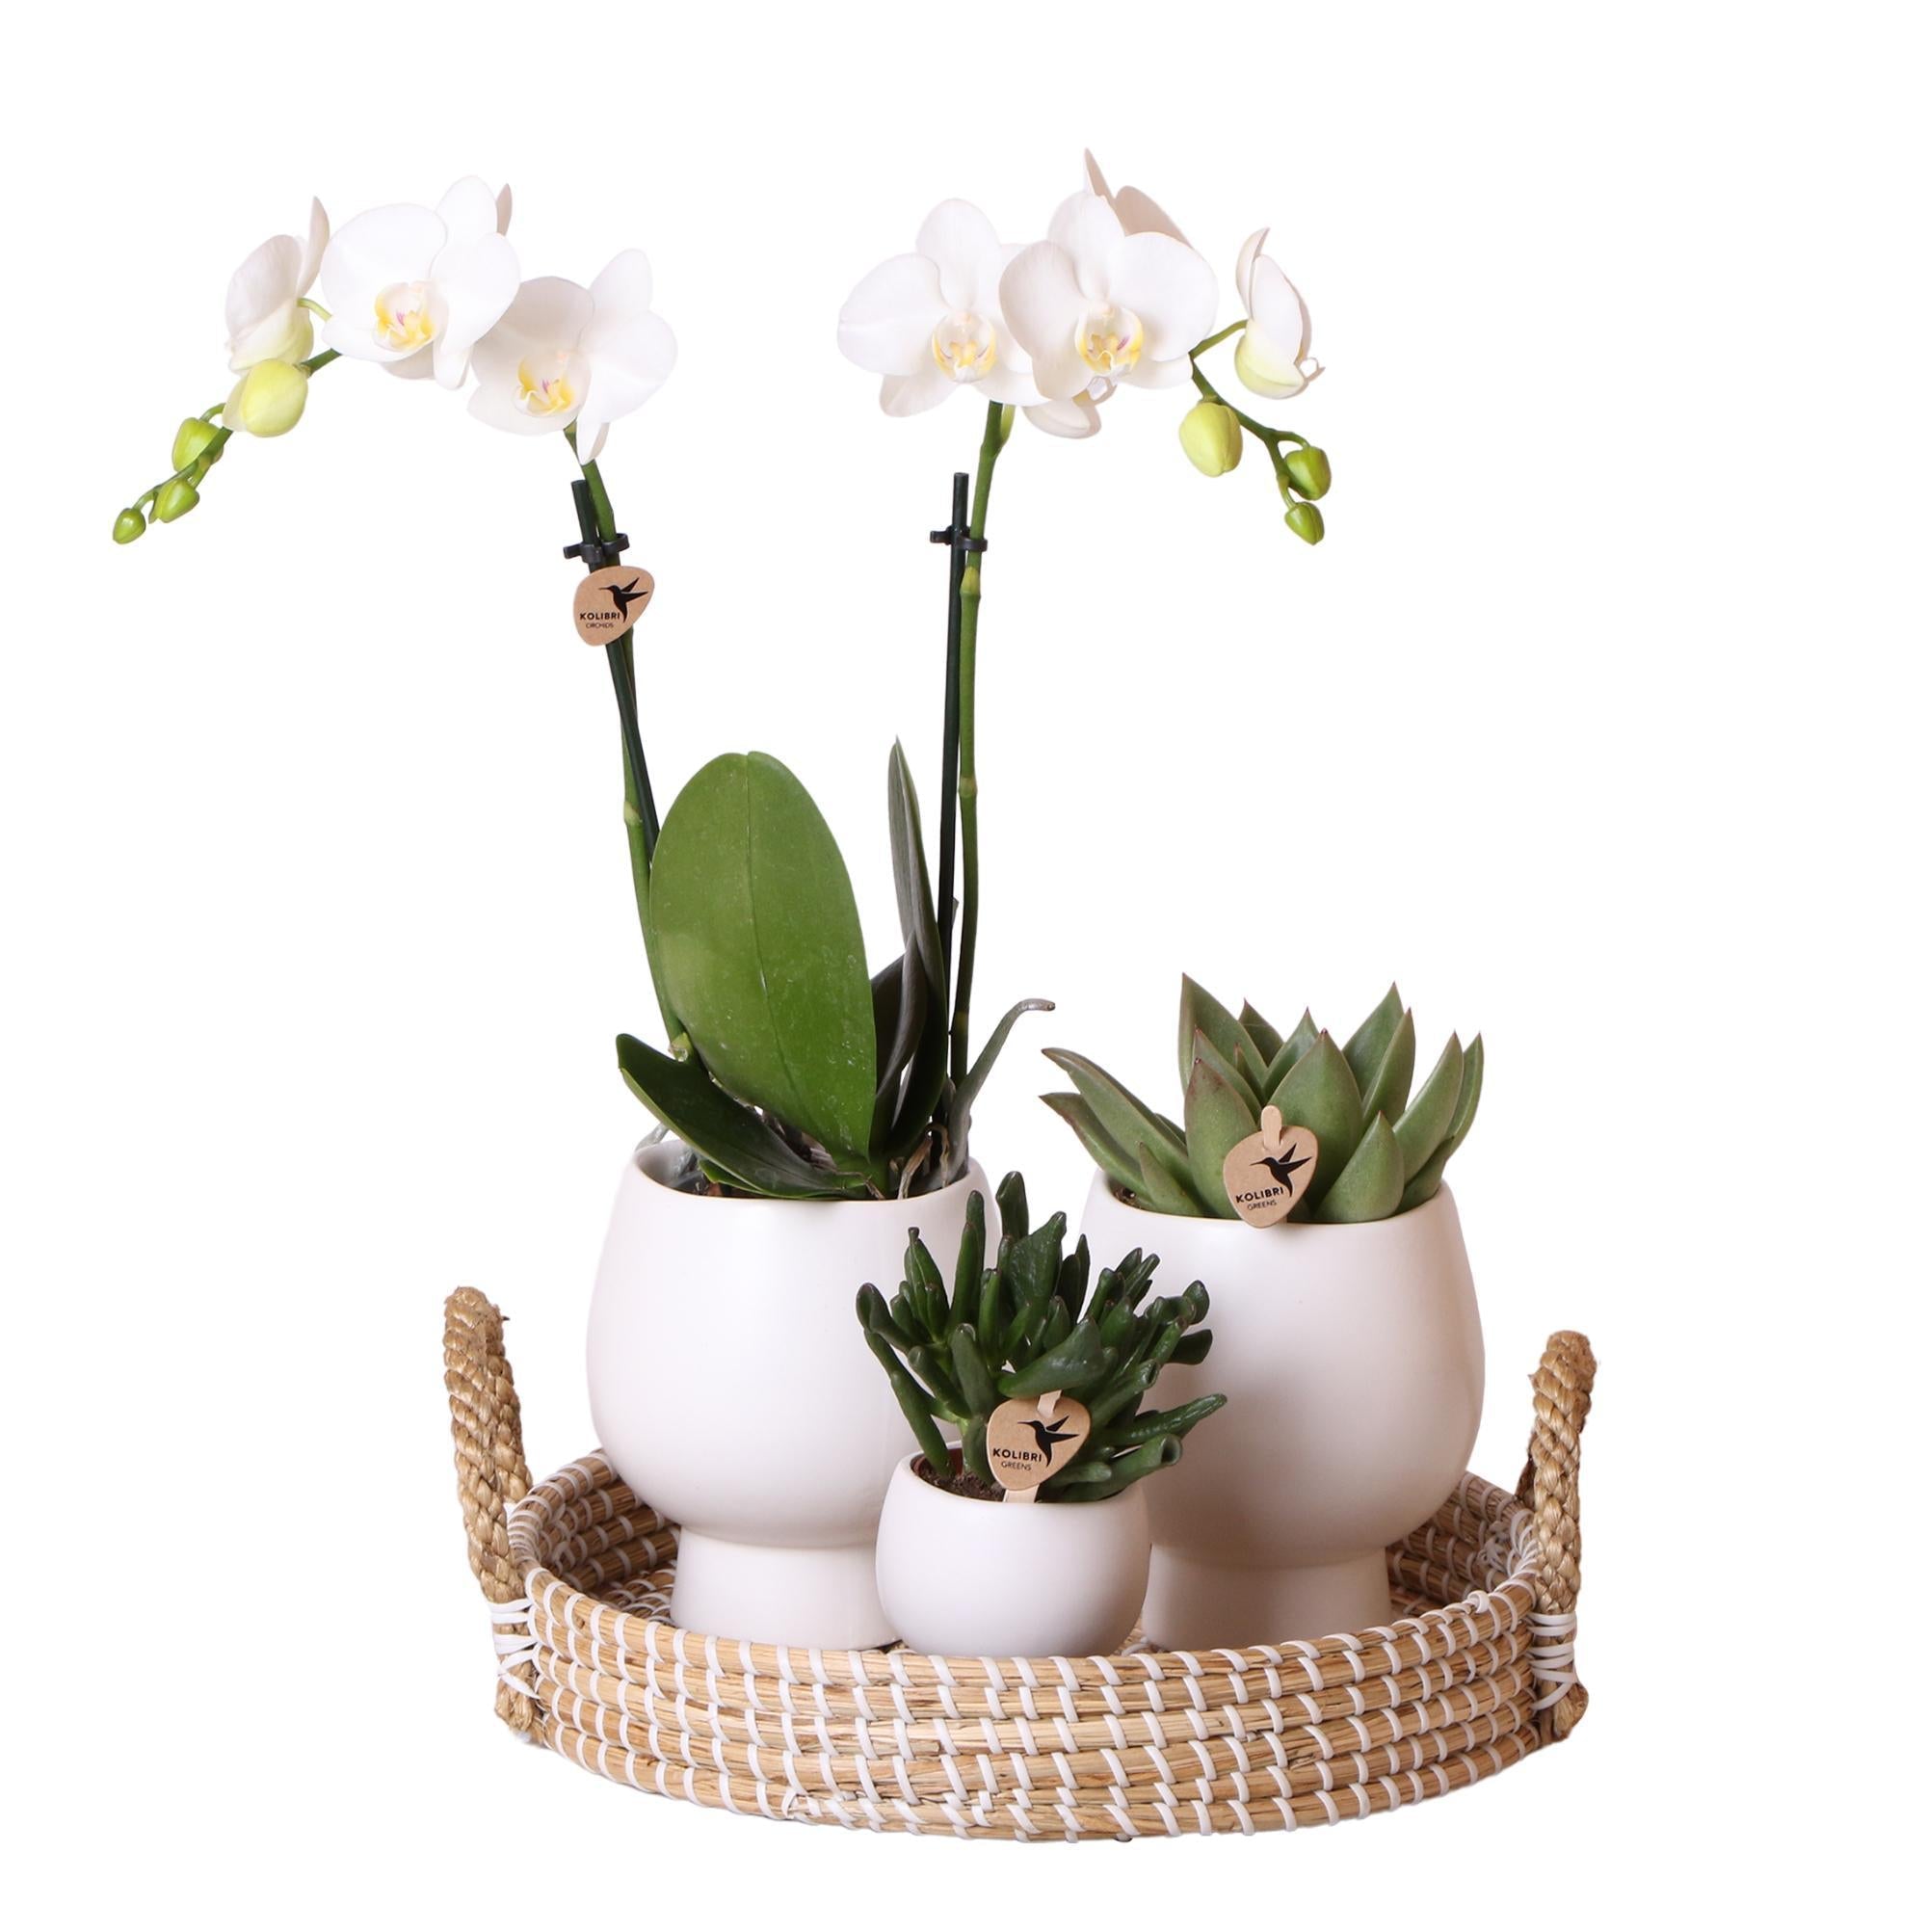 Everspring Planten set scandic white | groene planten set met witte phalaenopsis orchidee en succulenten incl. Keramieken sierpotten